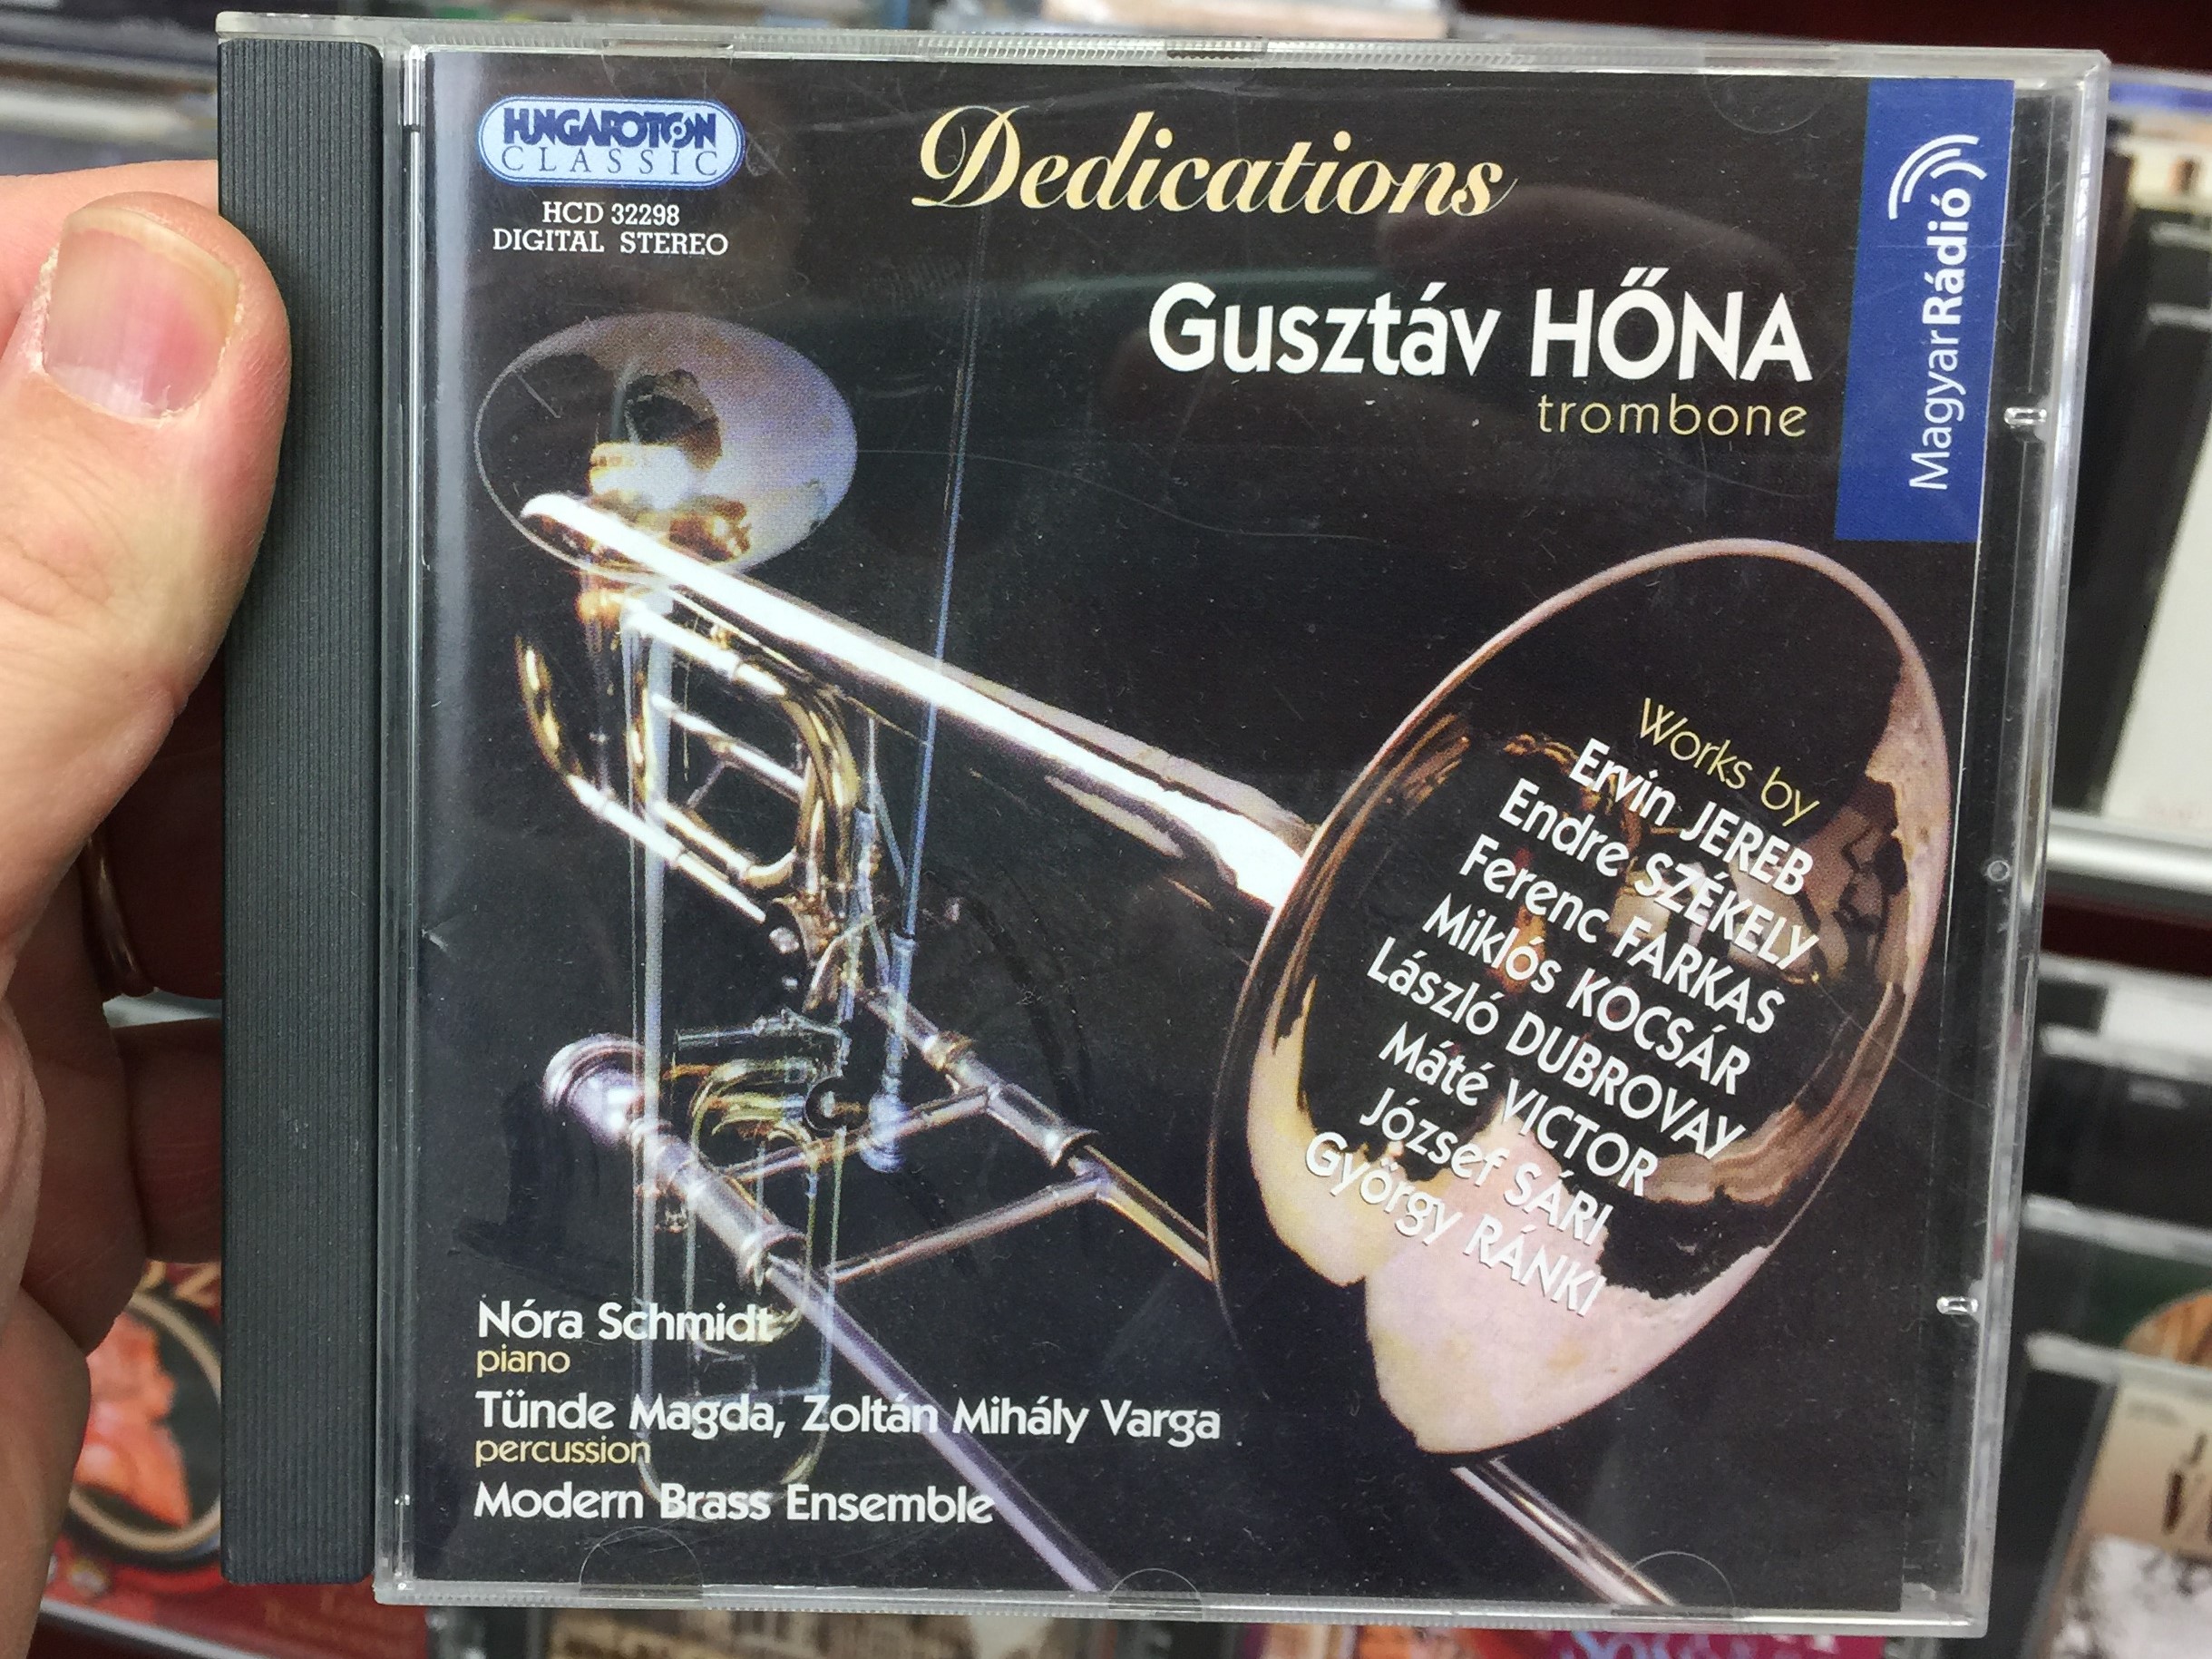 dedications-guszt-v-h-na-trombone-works-by-ervin-jereb-endre-sz-kely-ferenc-farkas-n-ra-schmidt-piano-t-nde-magda-zolt-n-mih-ly-varga-modern-brass-ensemble-hungaroton-classic-audio-cd-1-.jpg